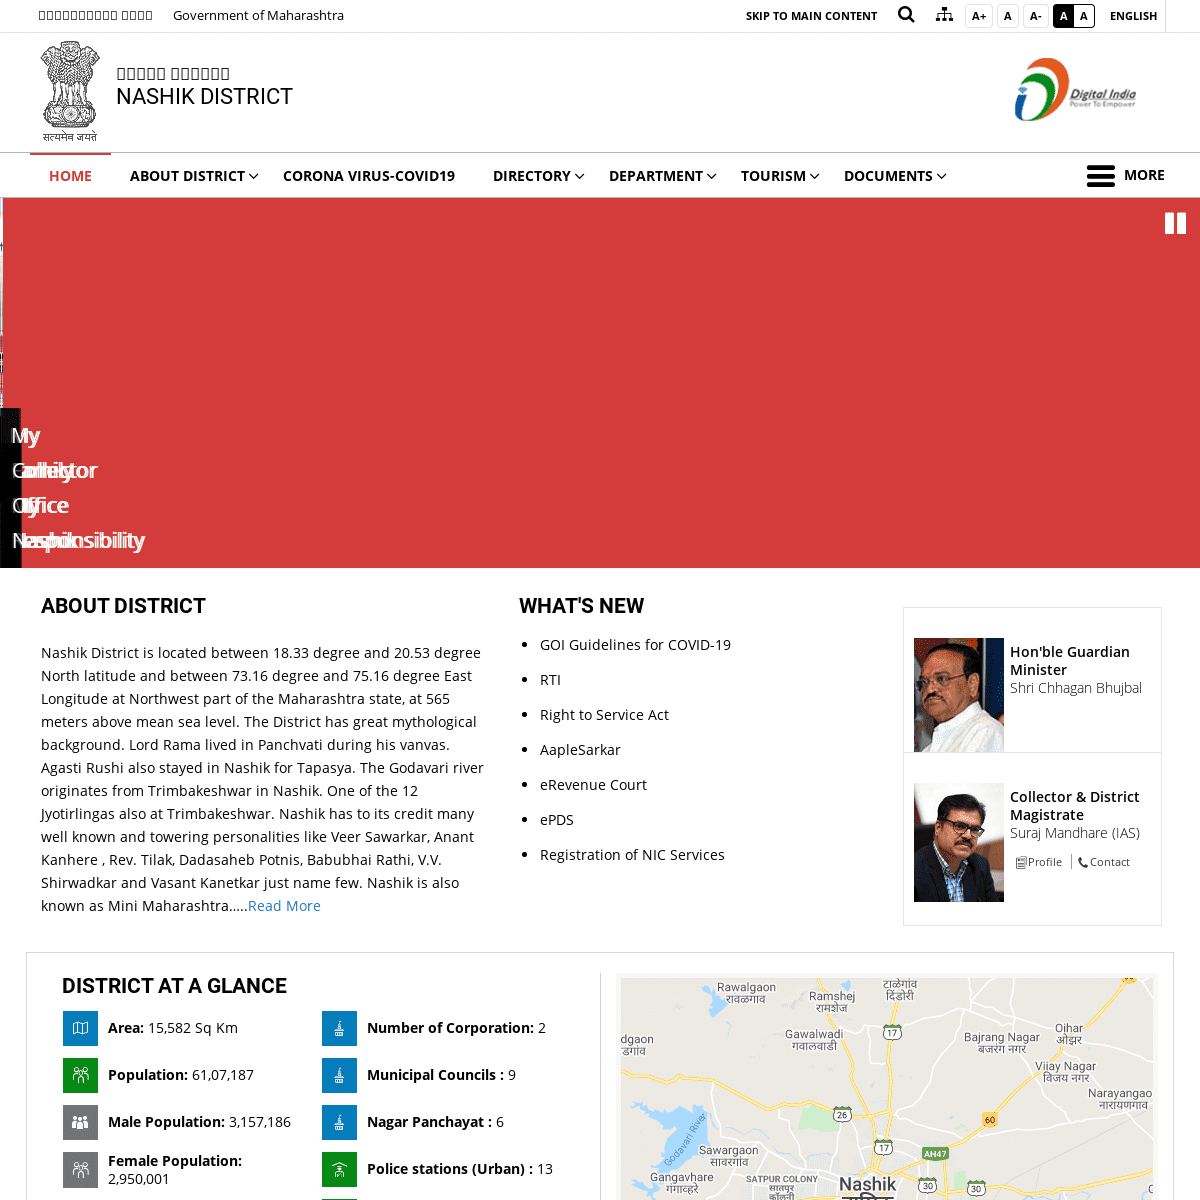 A complete backup of https://nashik.gov.in